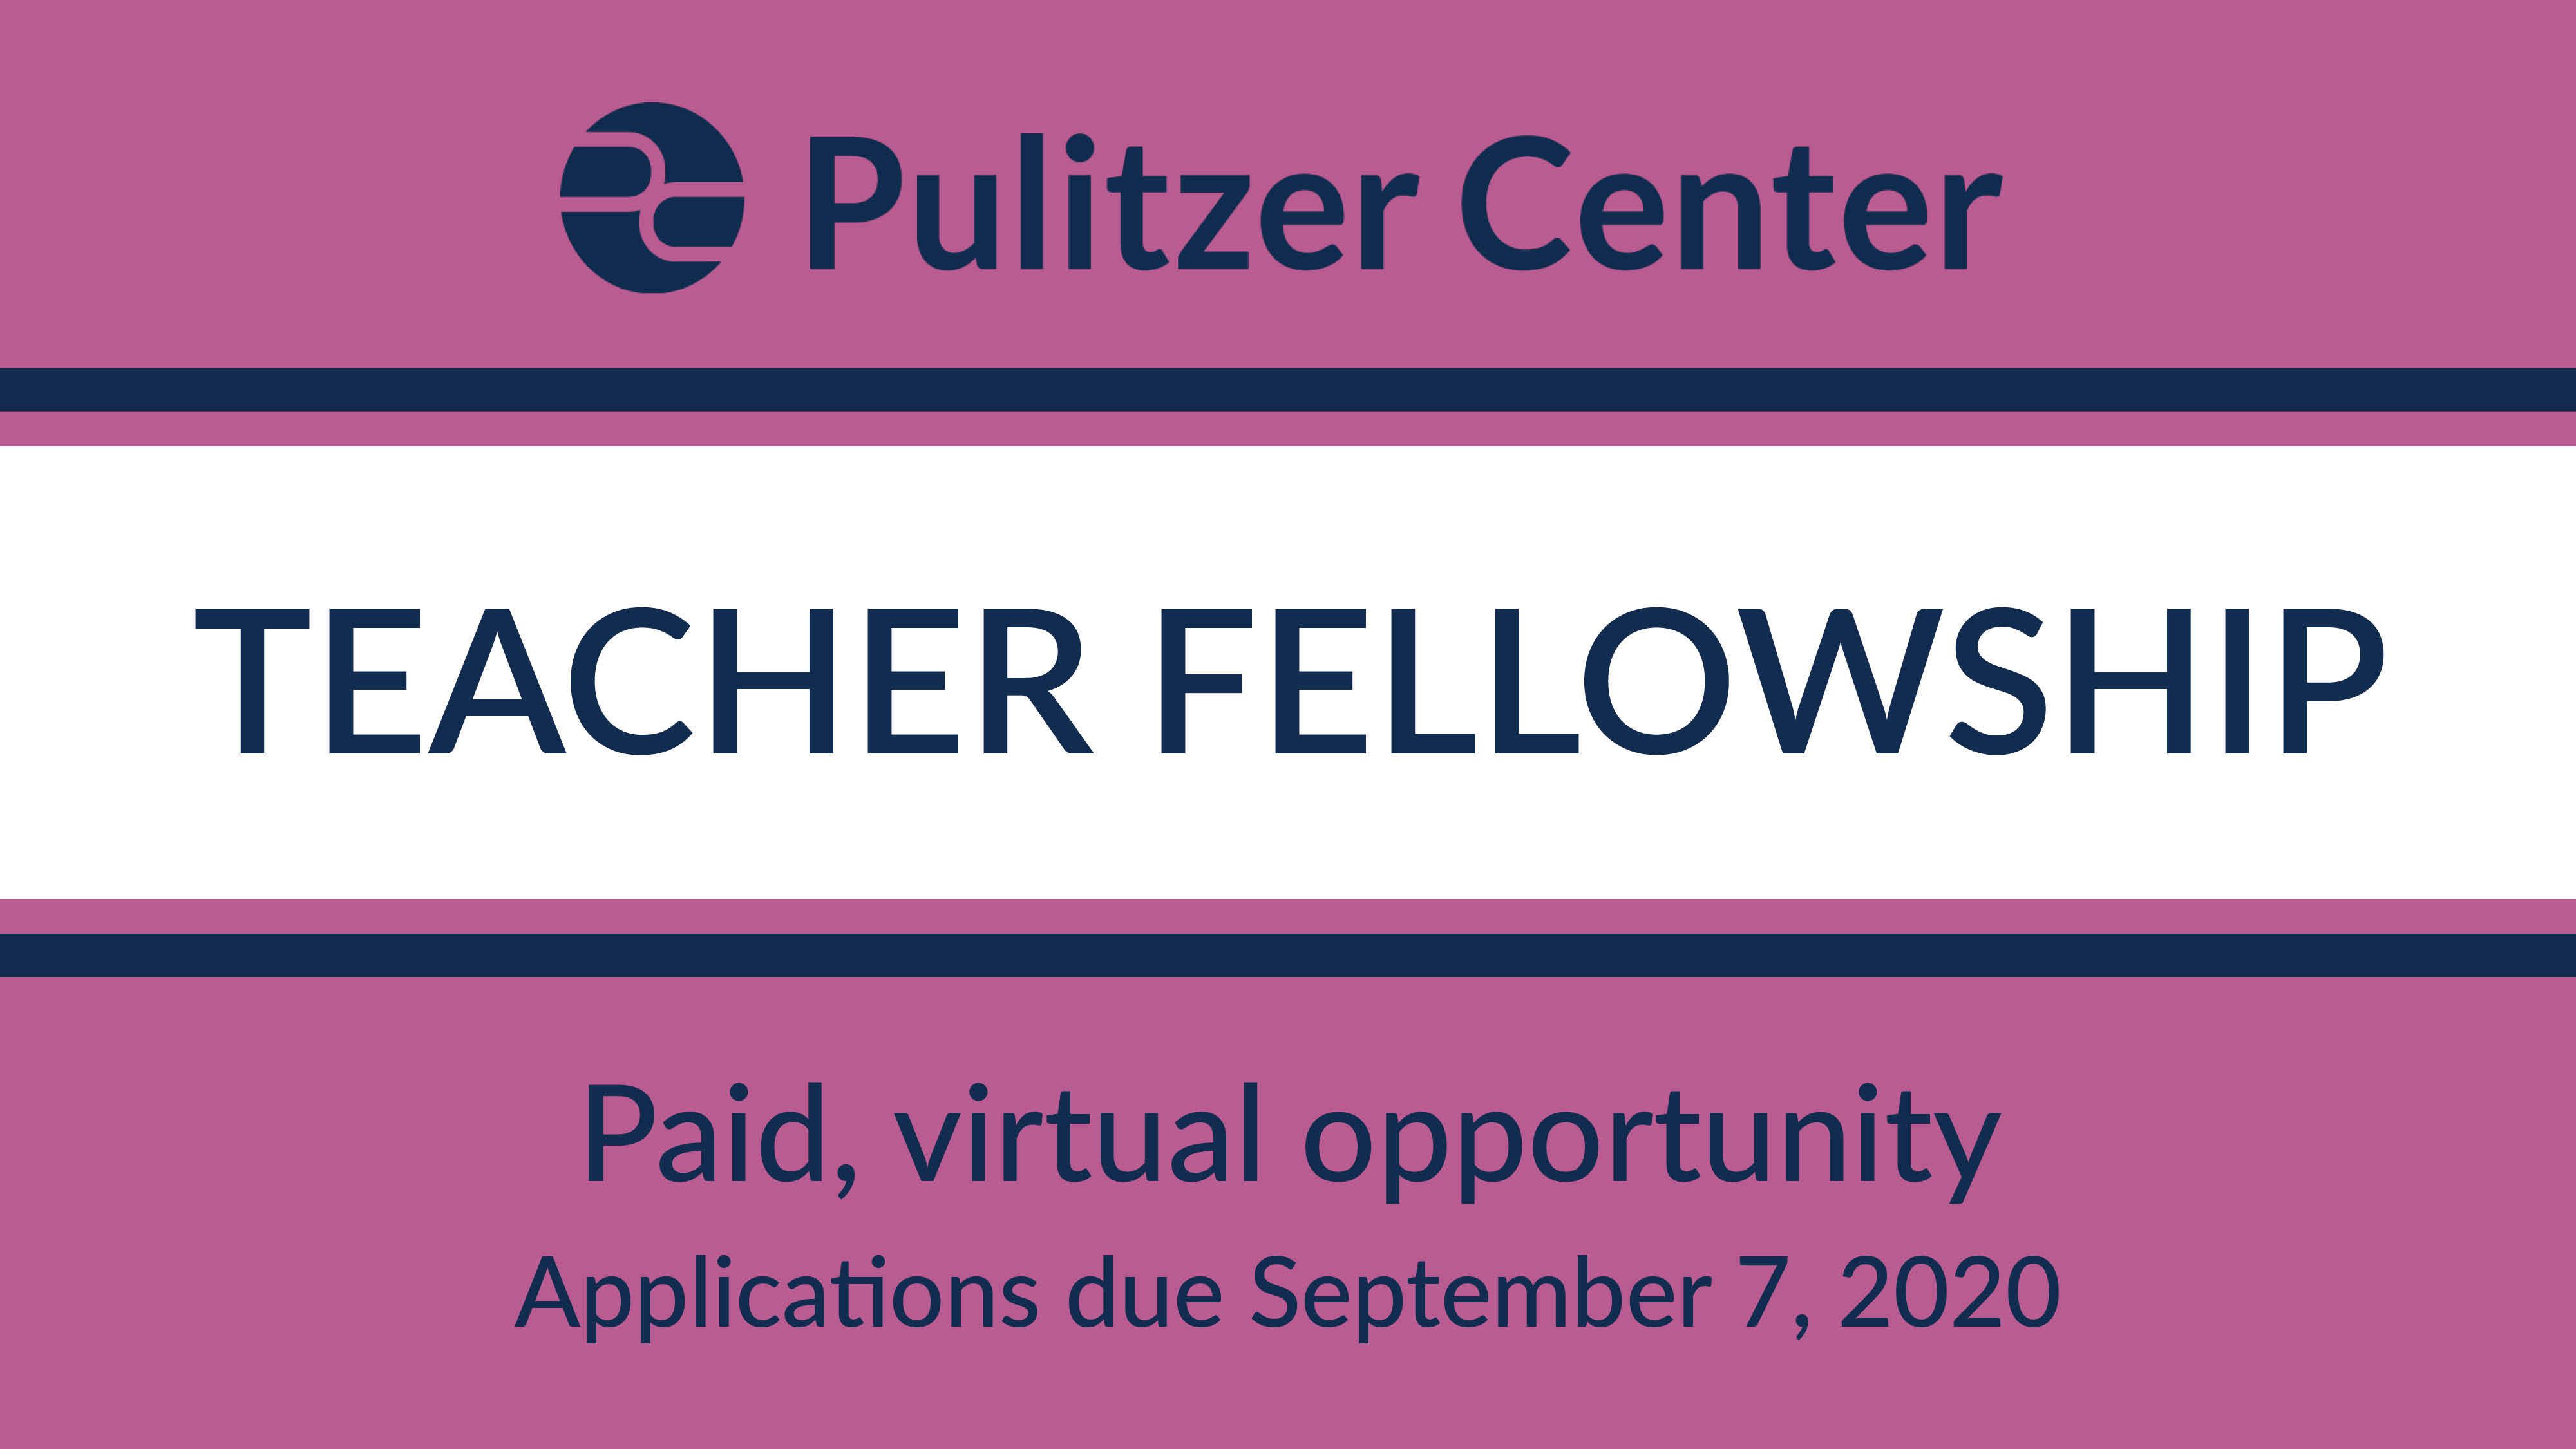 Apply for the fall 2020 Pulitzer Center Teacher Fellowship!